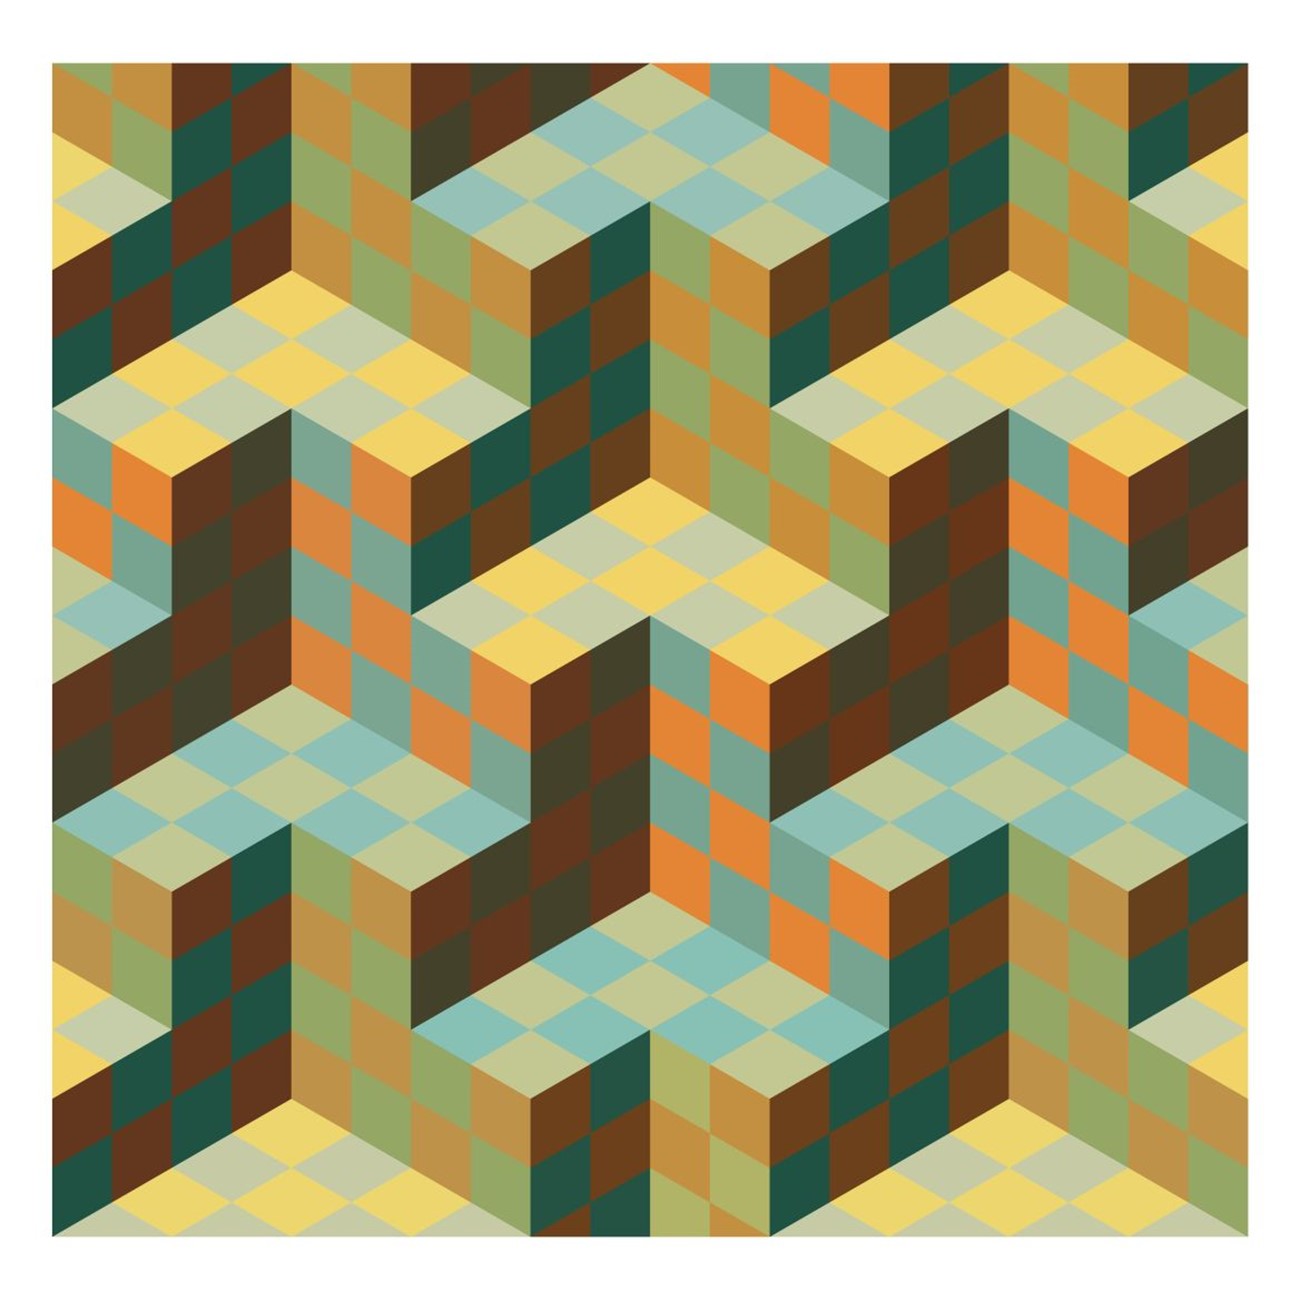 Tessellation Illusions - Mental Bomb